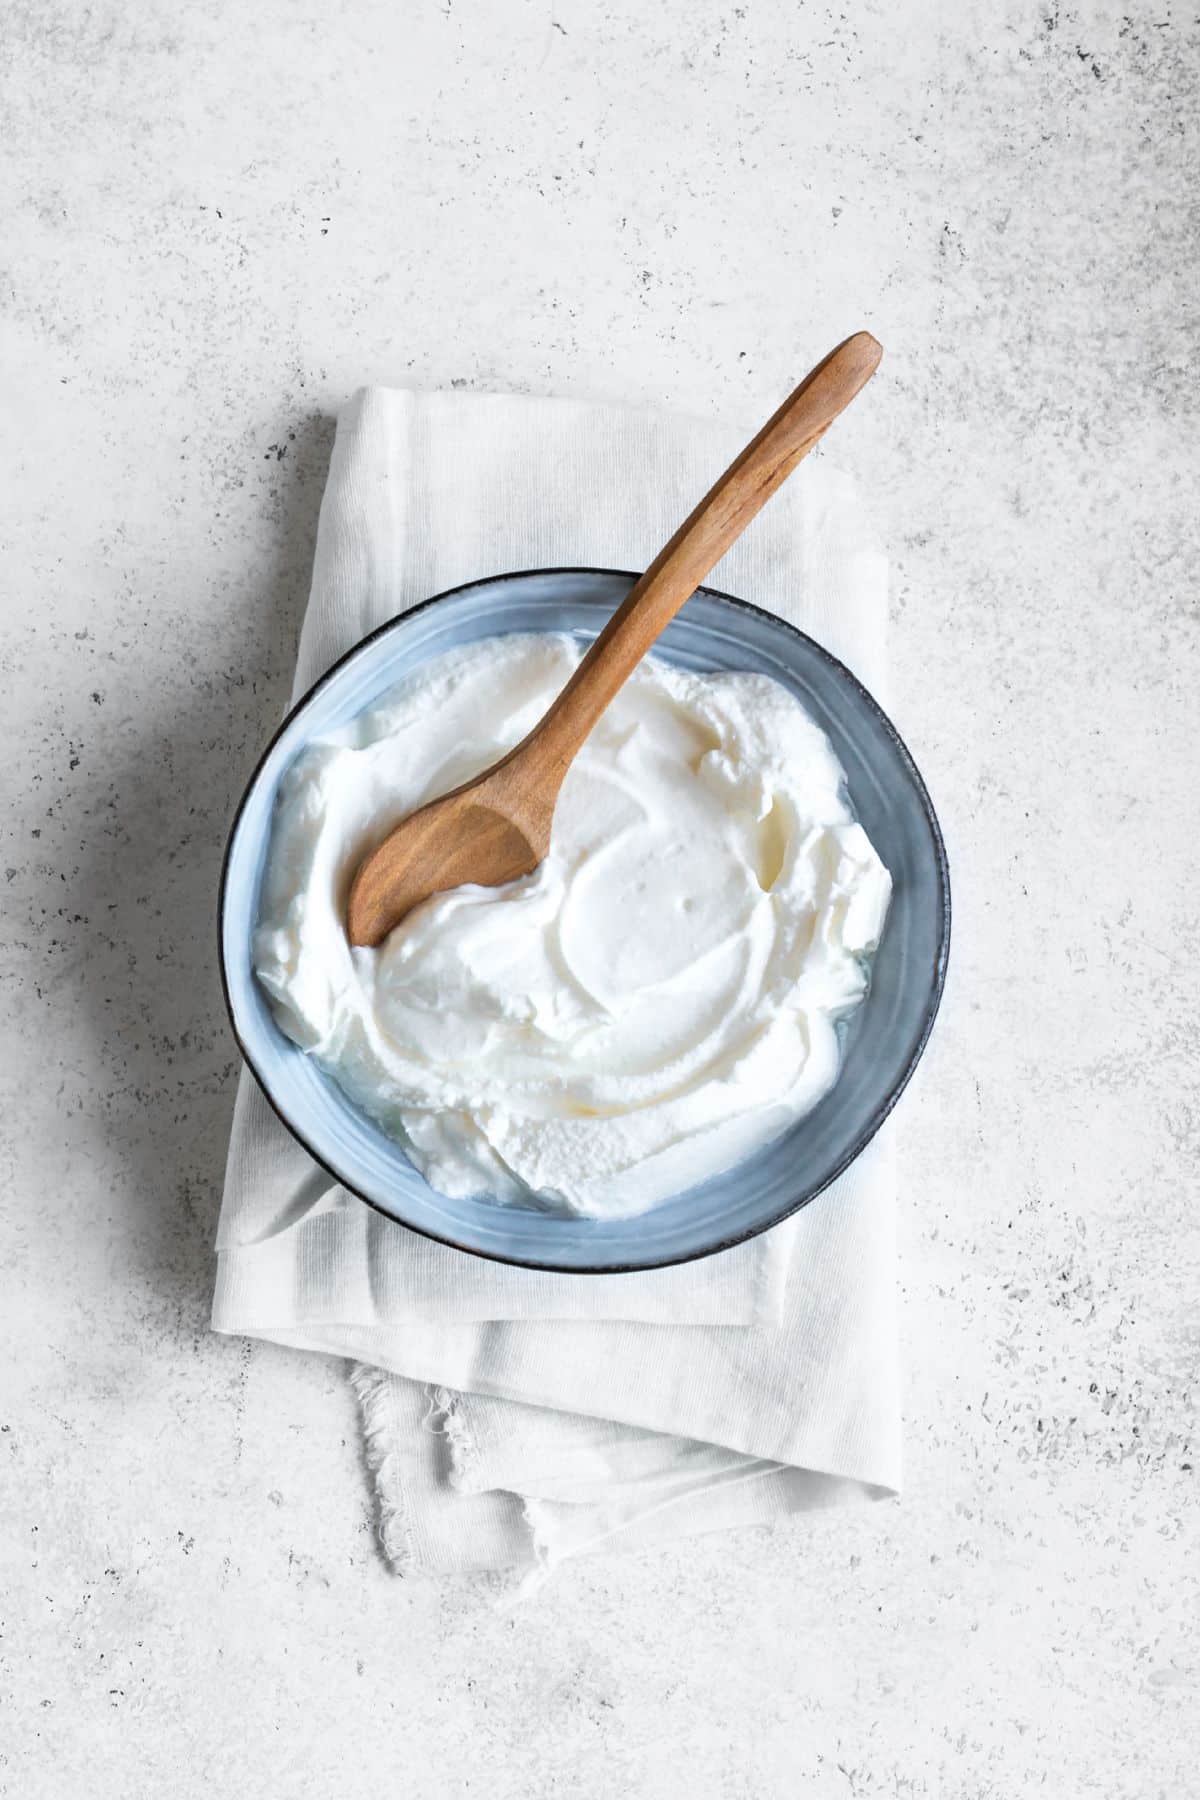 Bowl of greek yogurt with spoon on light surface.